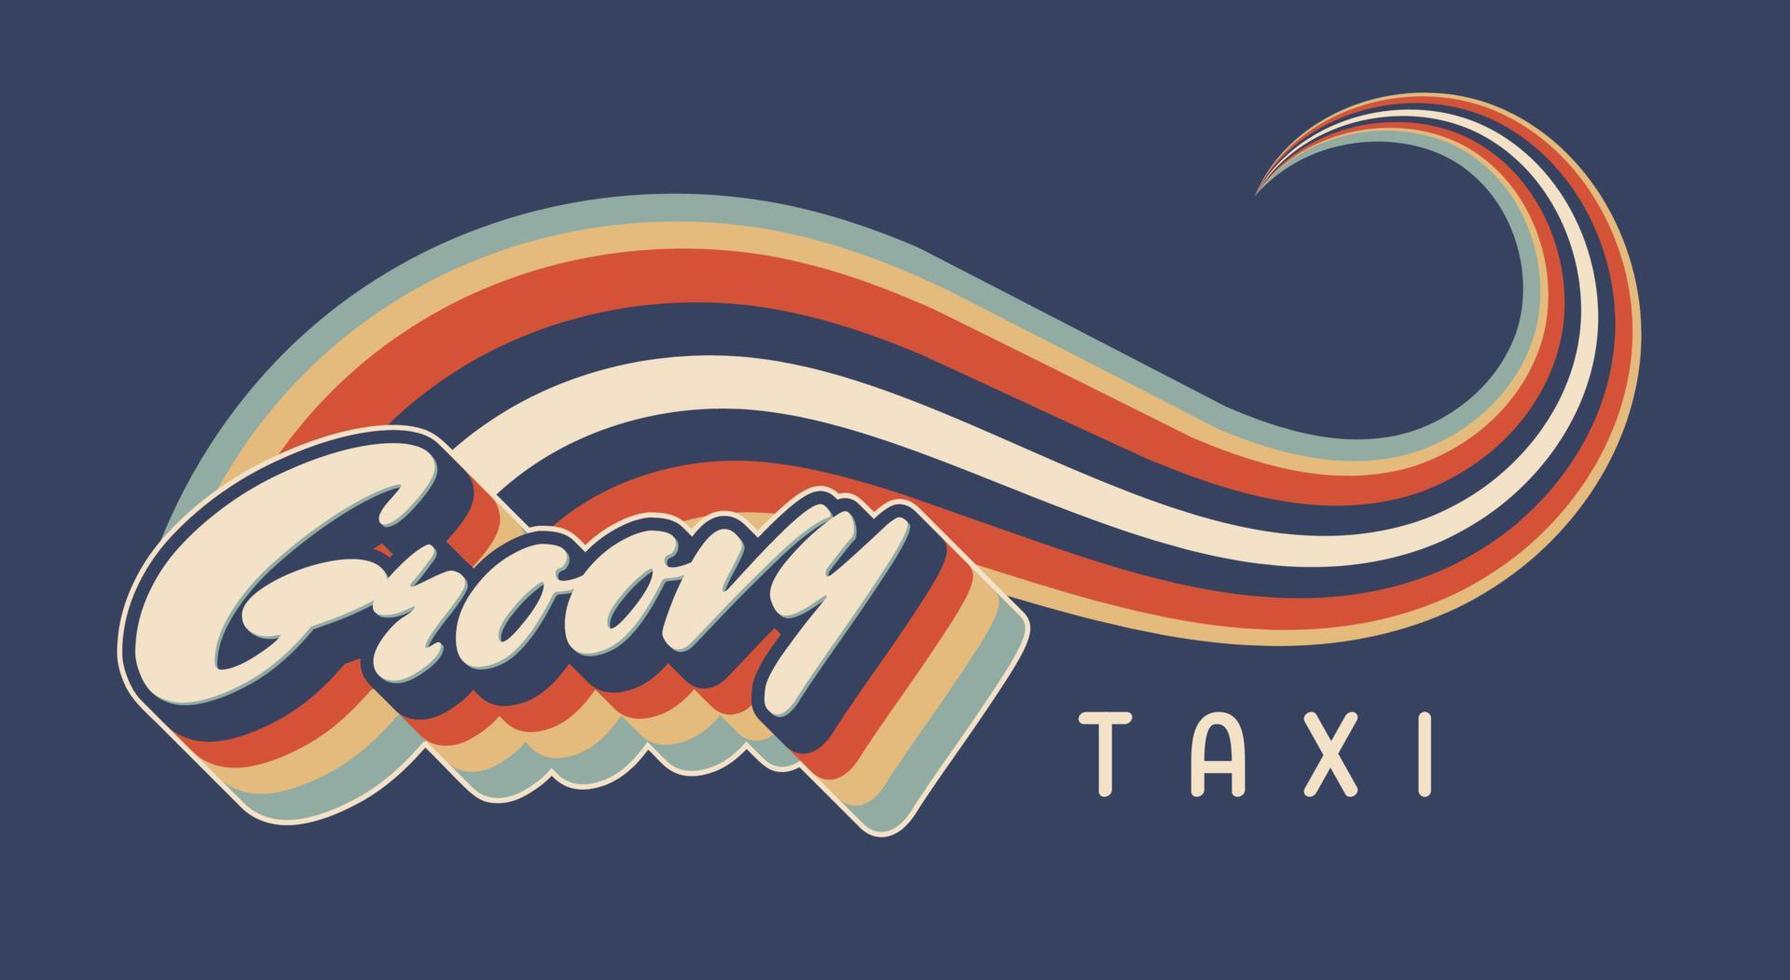 Retro inscription Groovy Taxi on a dark background with a retro rainbow wavy vector